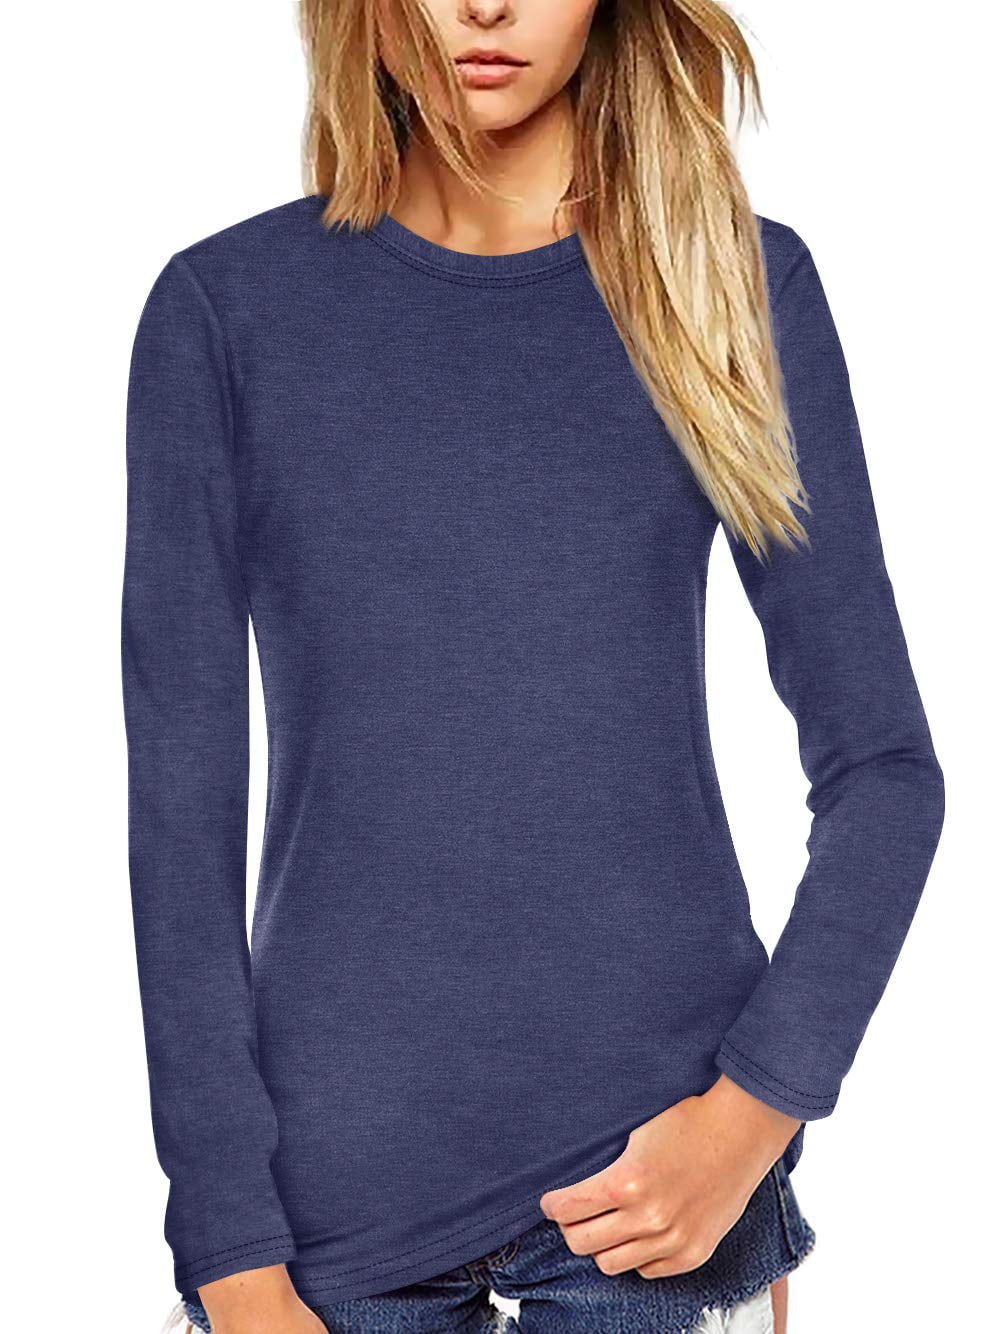 Amoretu Women T Shirt Long Sleeve Crew Neck Tee Tops(Blue L) - Walmart.com